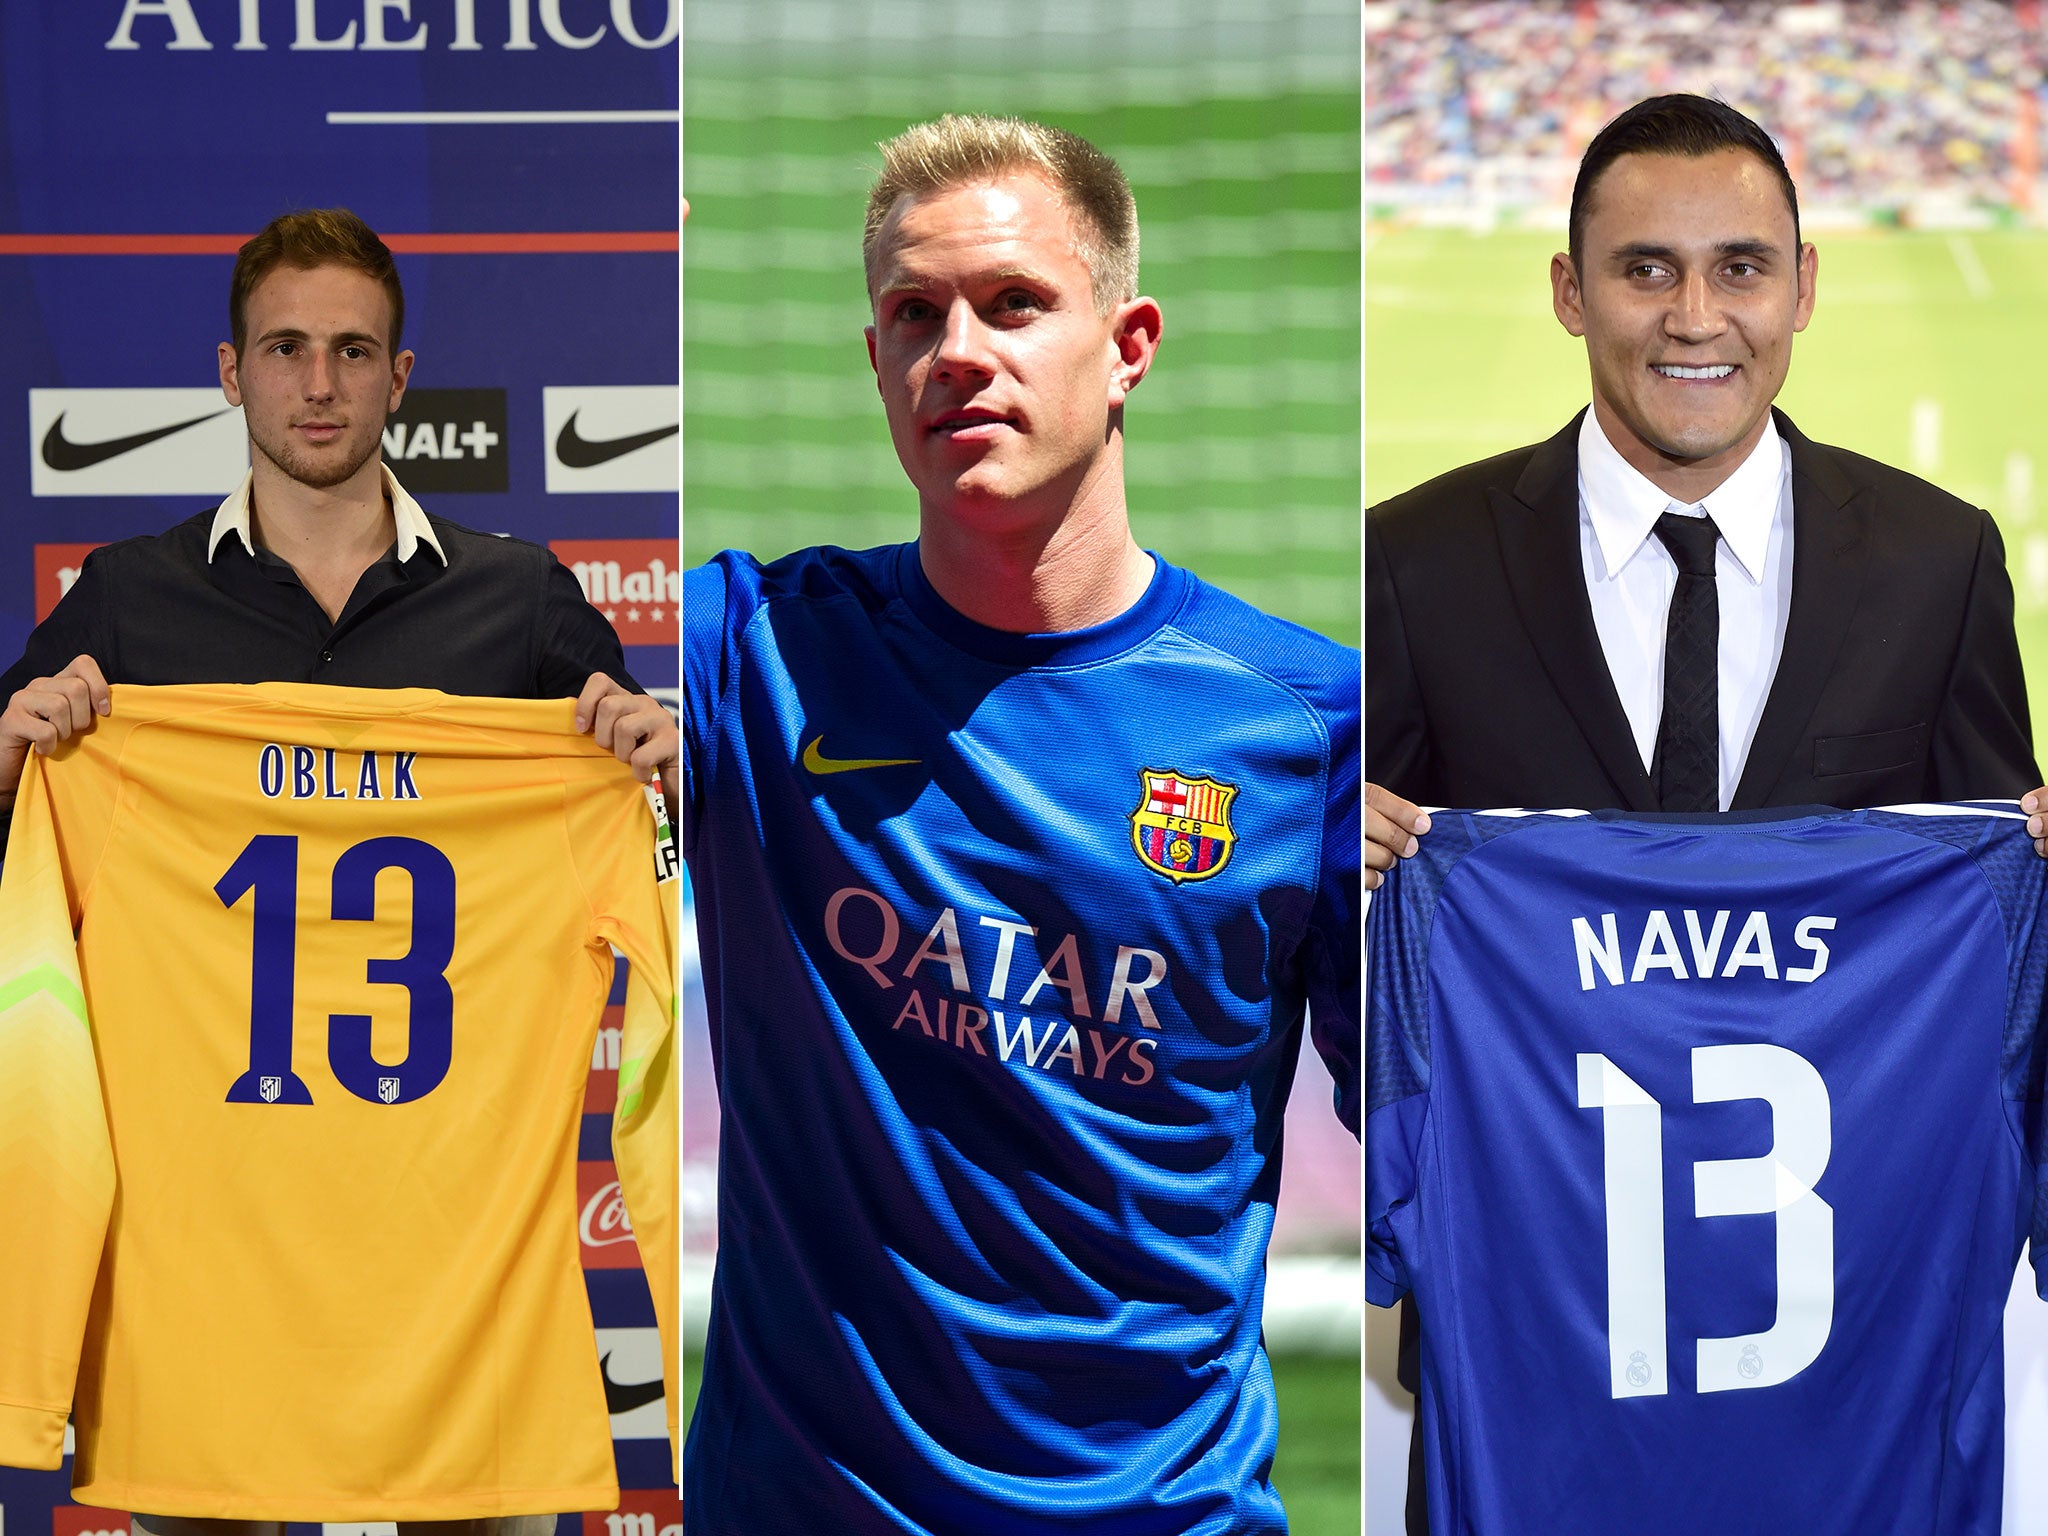 The new boys: Atletico Madrid's Jan Oblak, Barcelona's Marc Andre ter-Stegen and Real Madrid's Keylor Navas